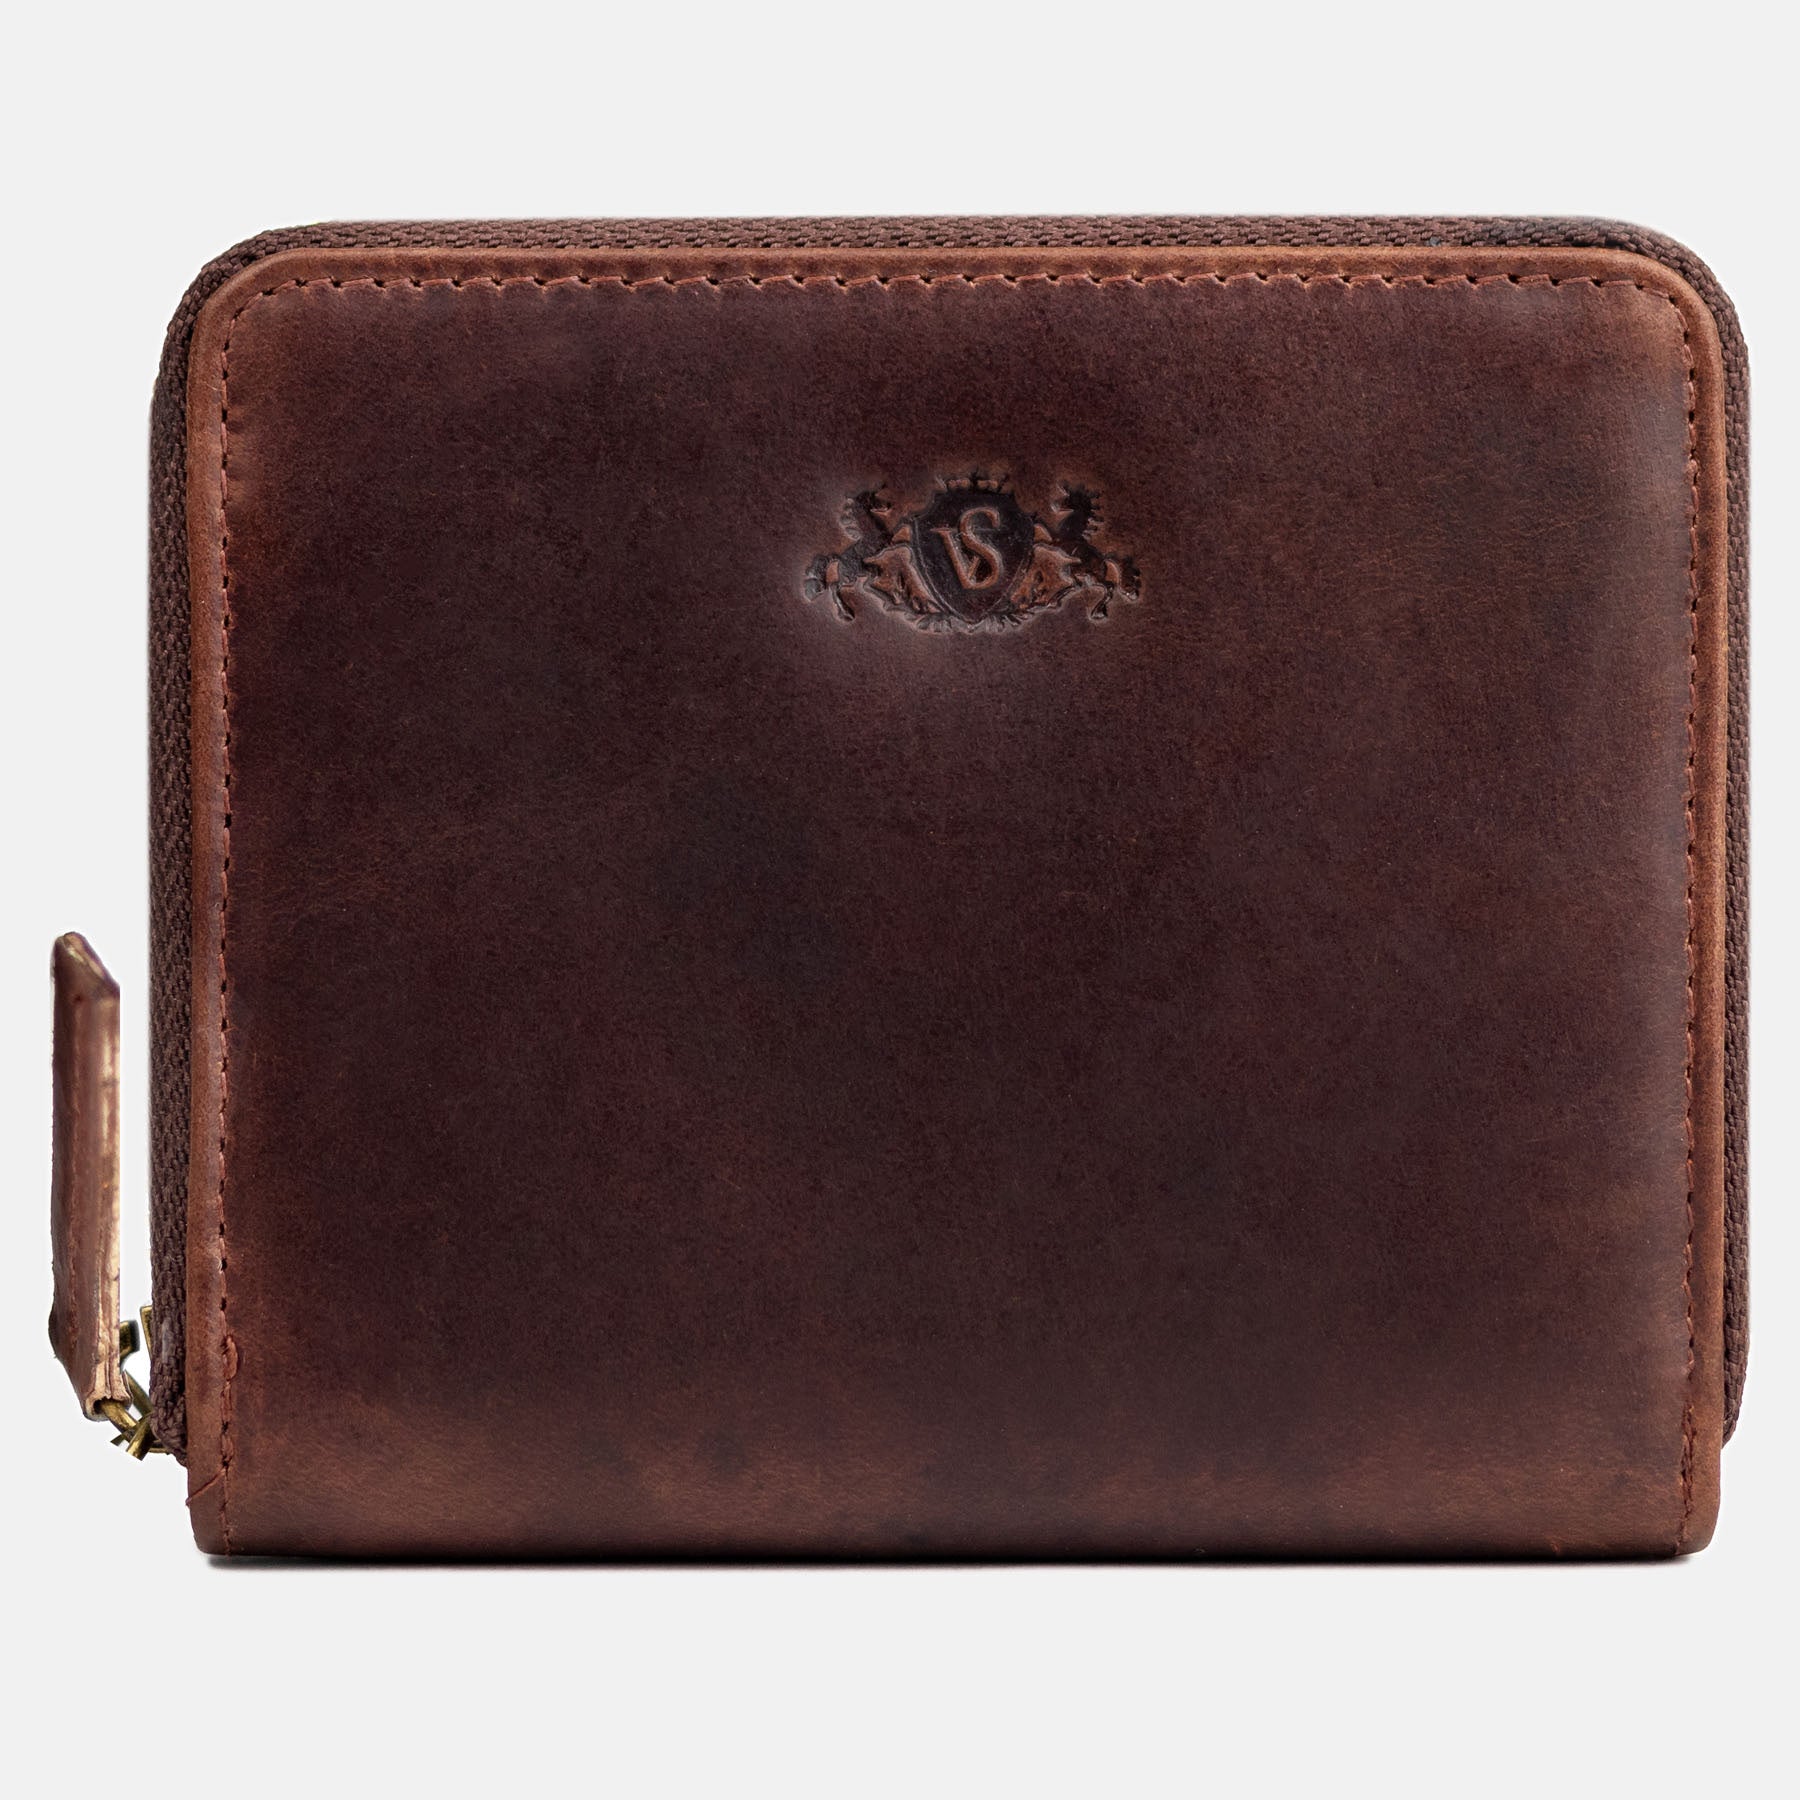 Wallet HANNAH natural leather